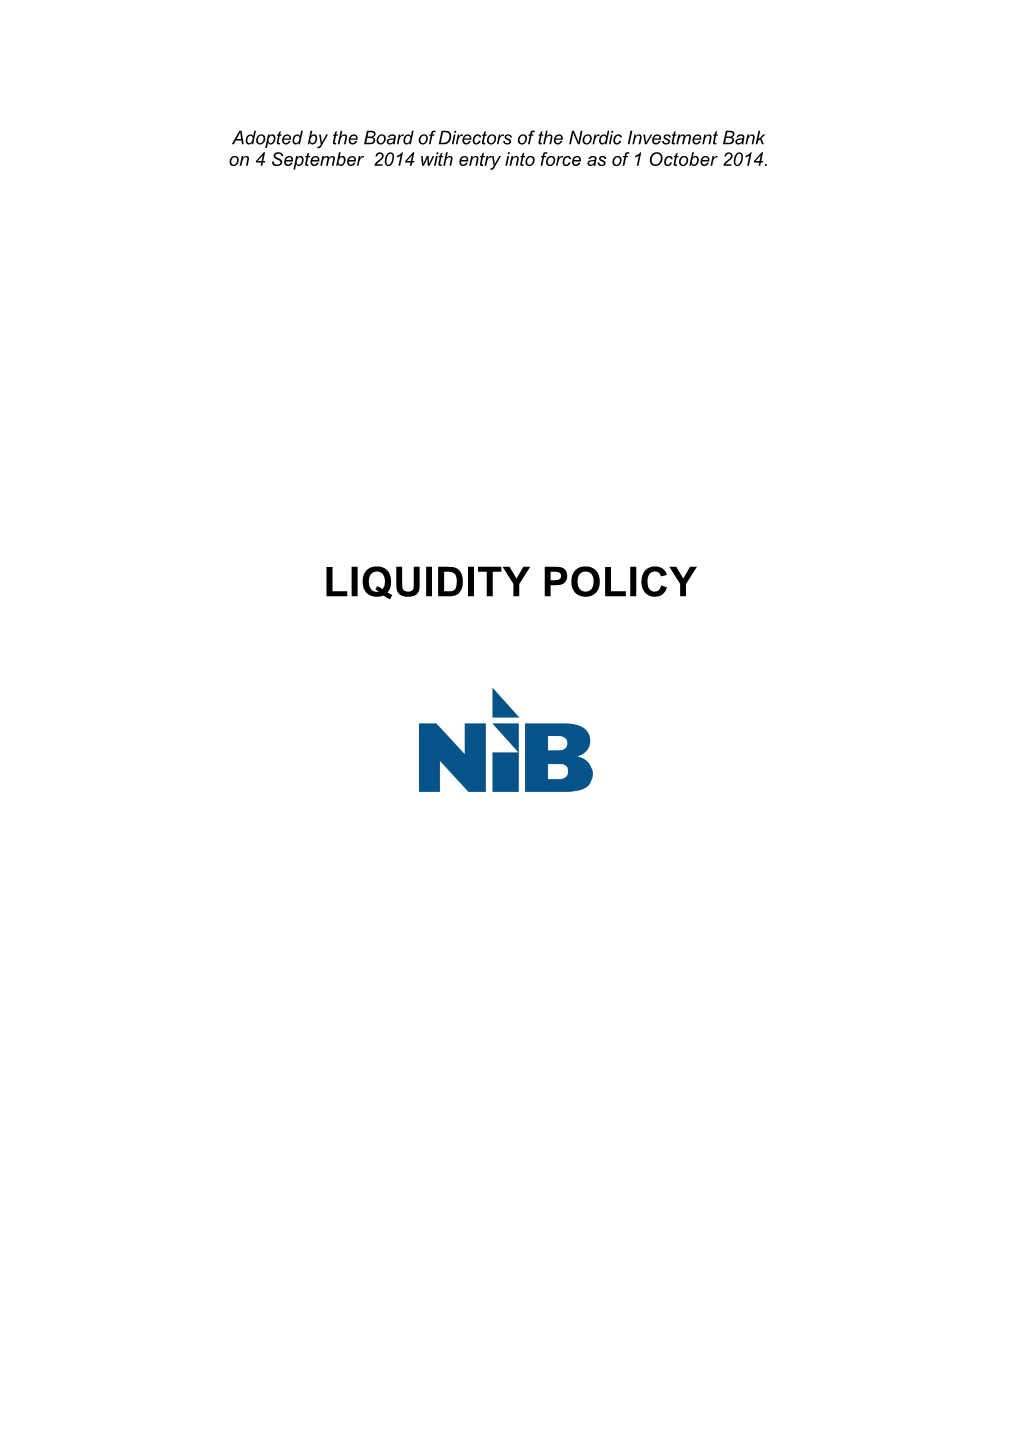 Liquidity Policy